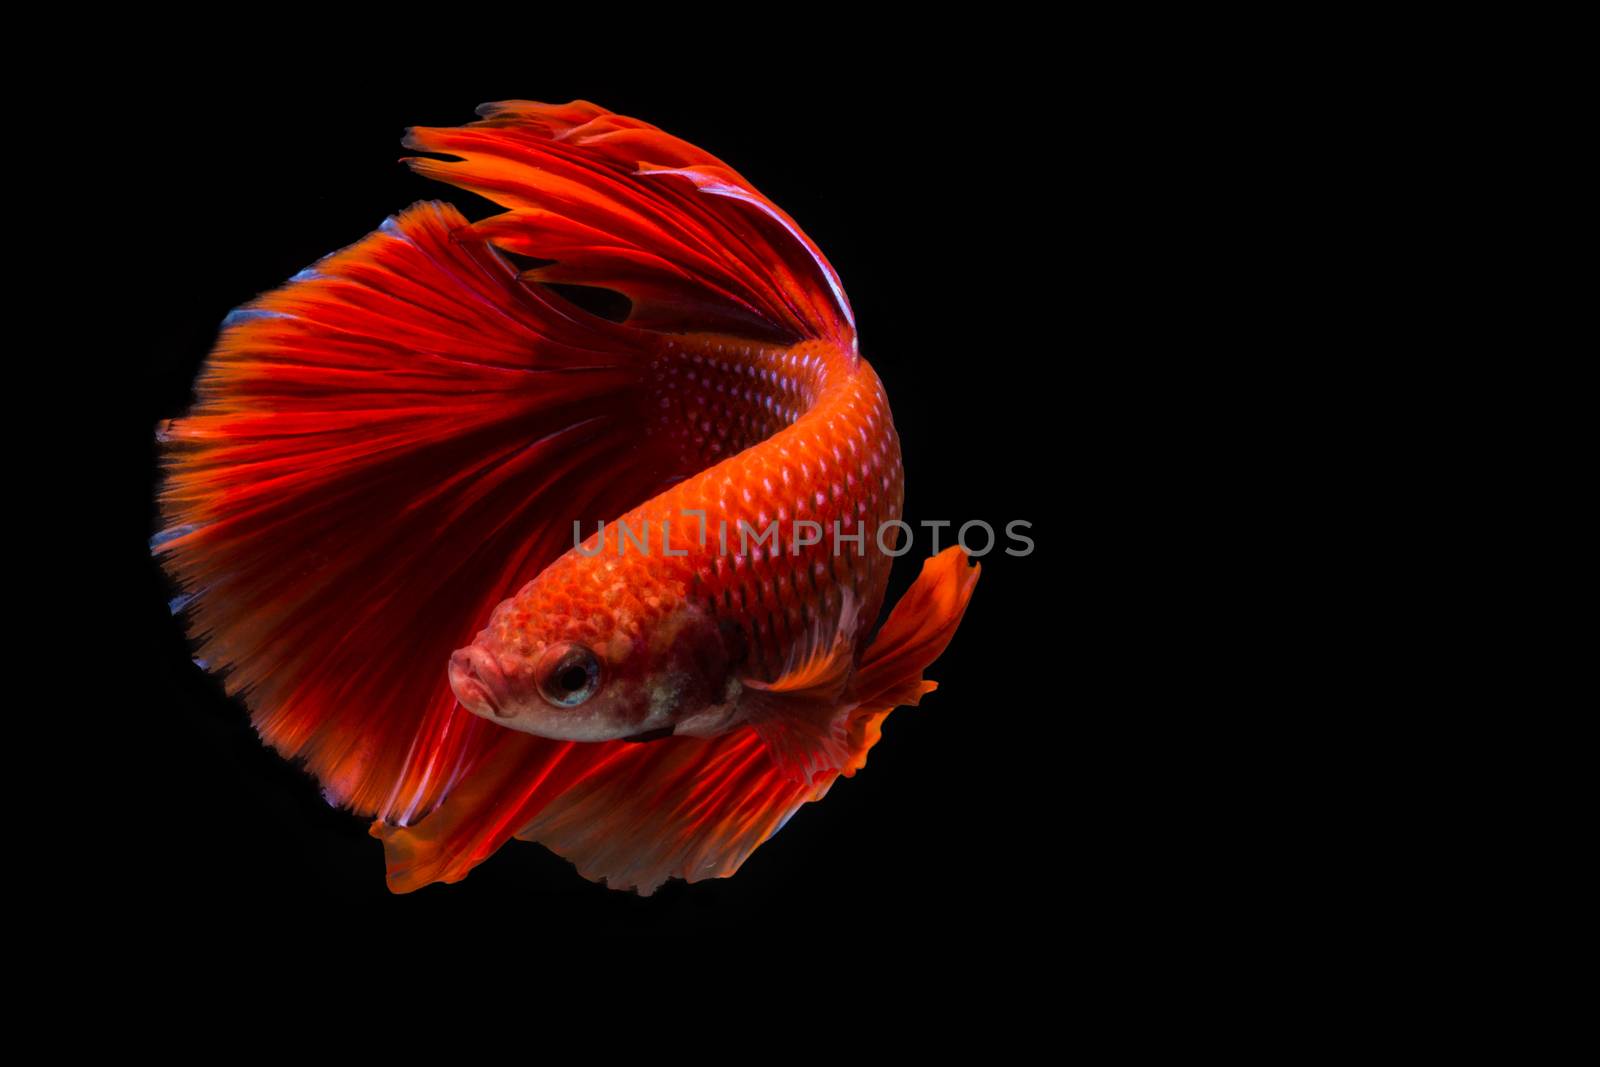 Red betta fish, siamese fighting fish on black background